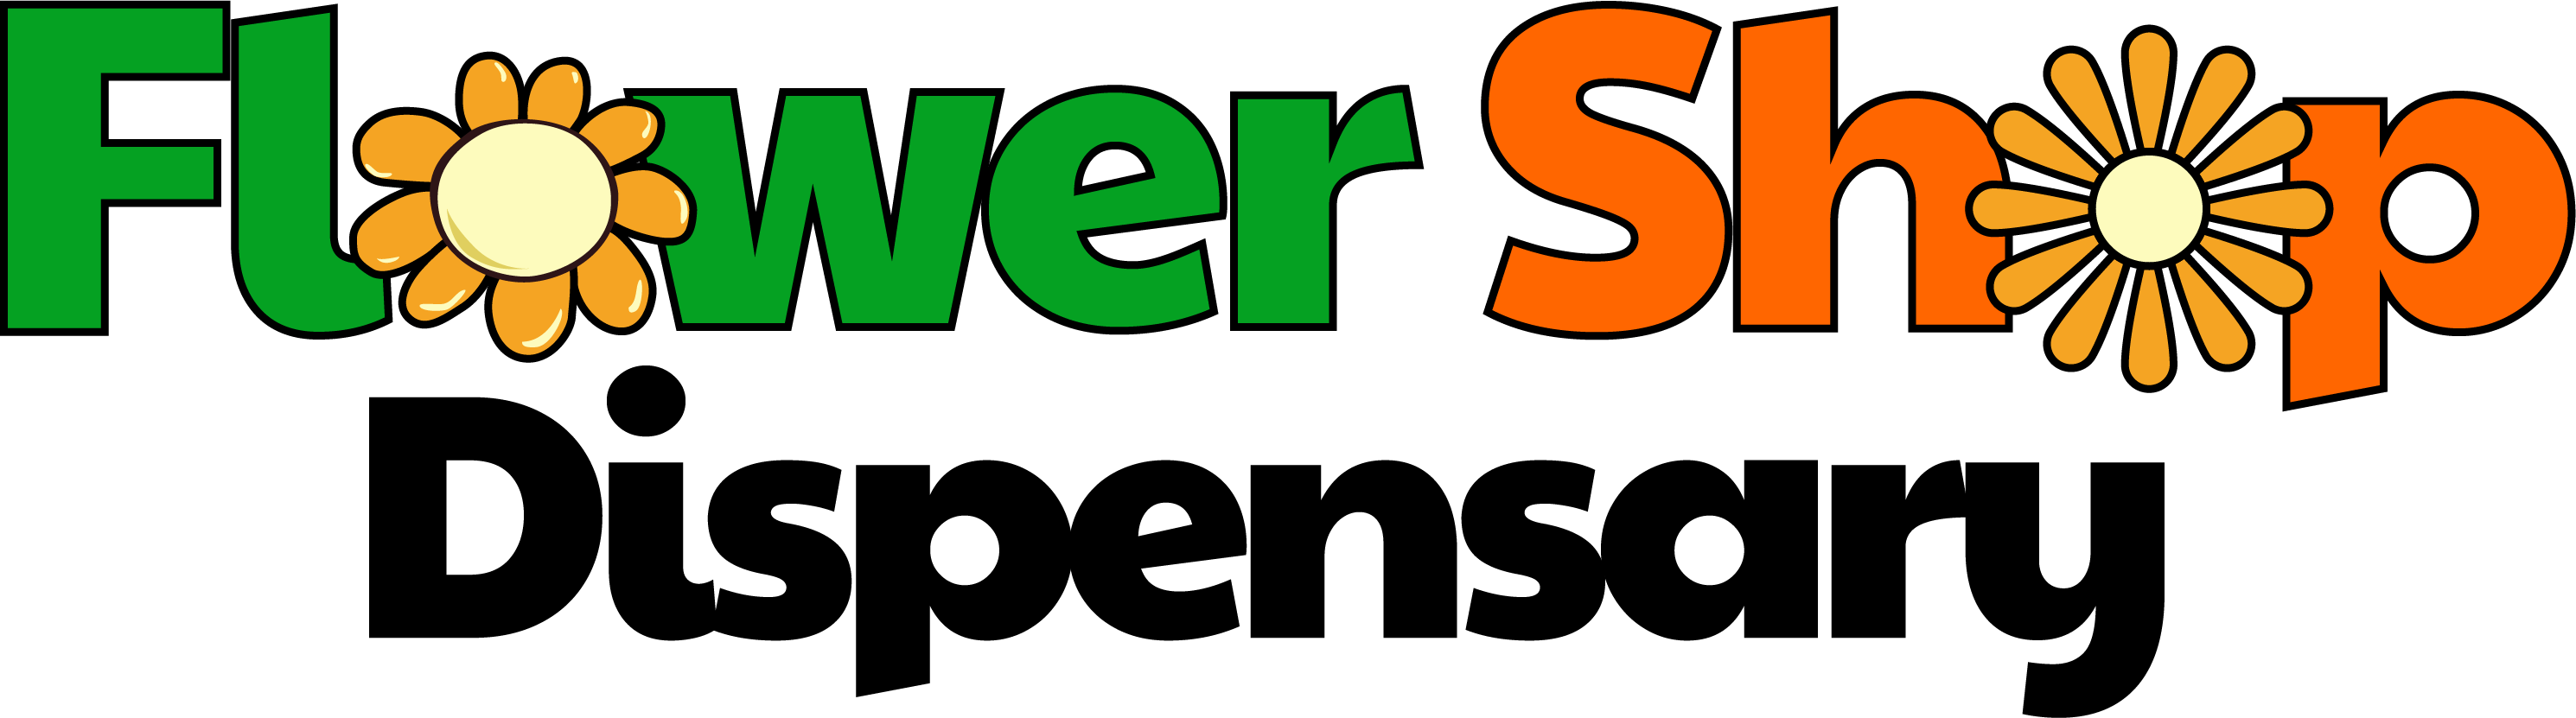 The Flower Shop Dispensary Sioux Falls, SD Logo